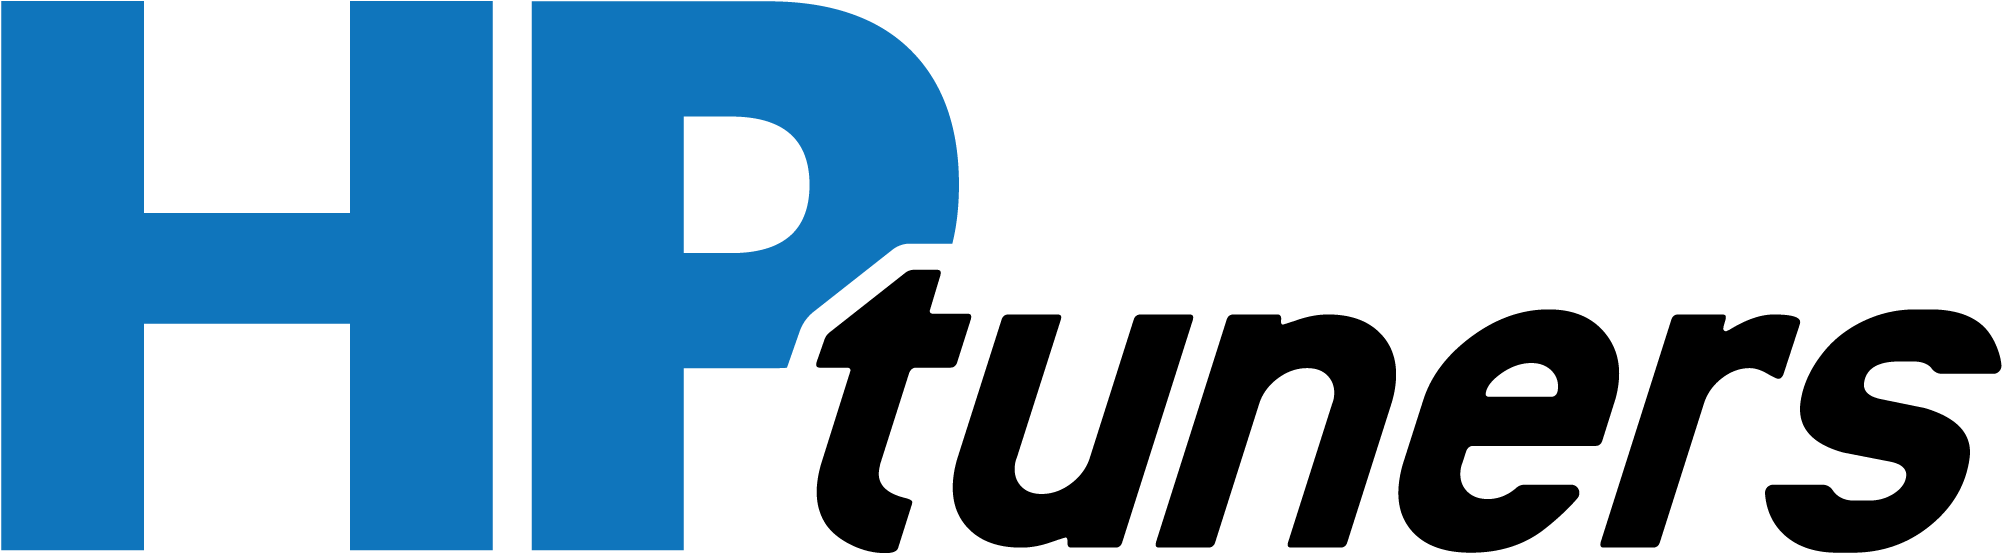 H P Tuners Logo